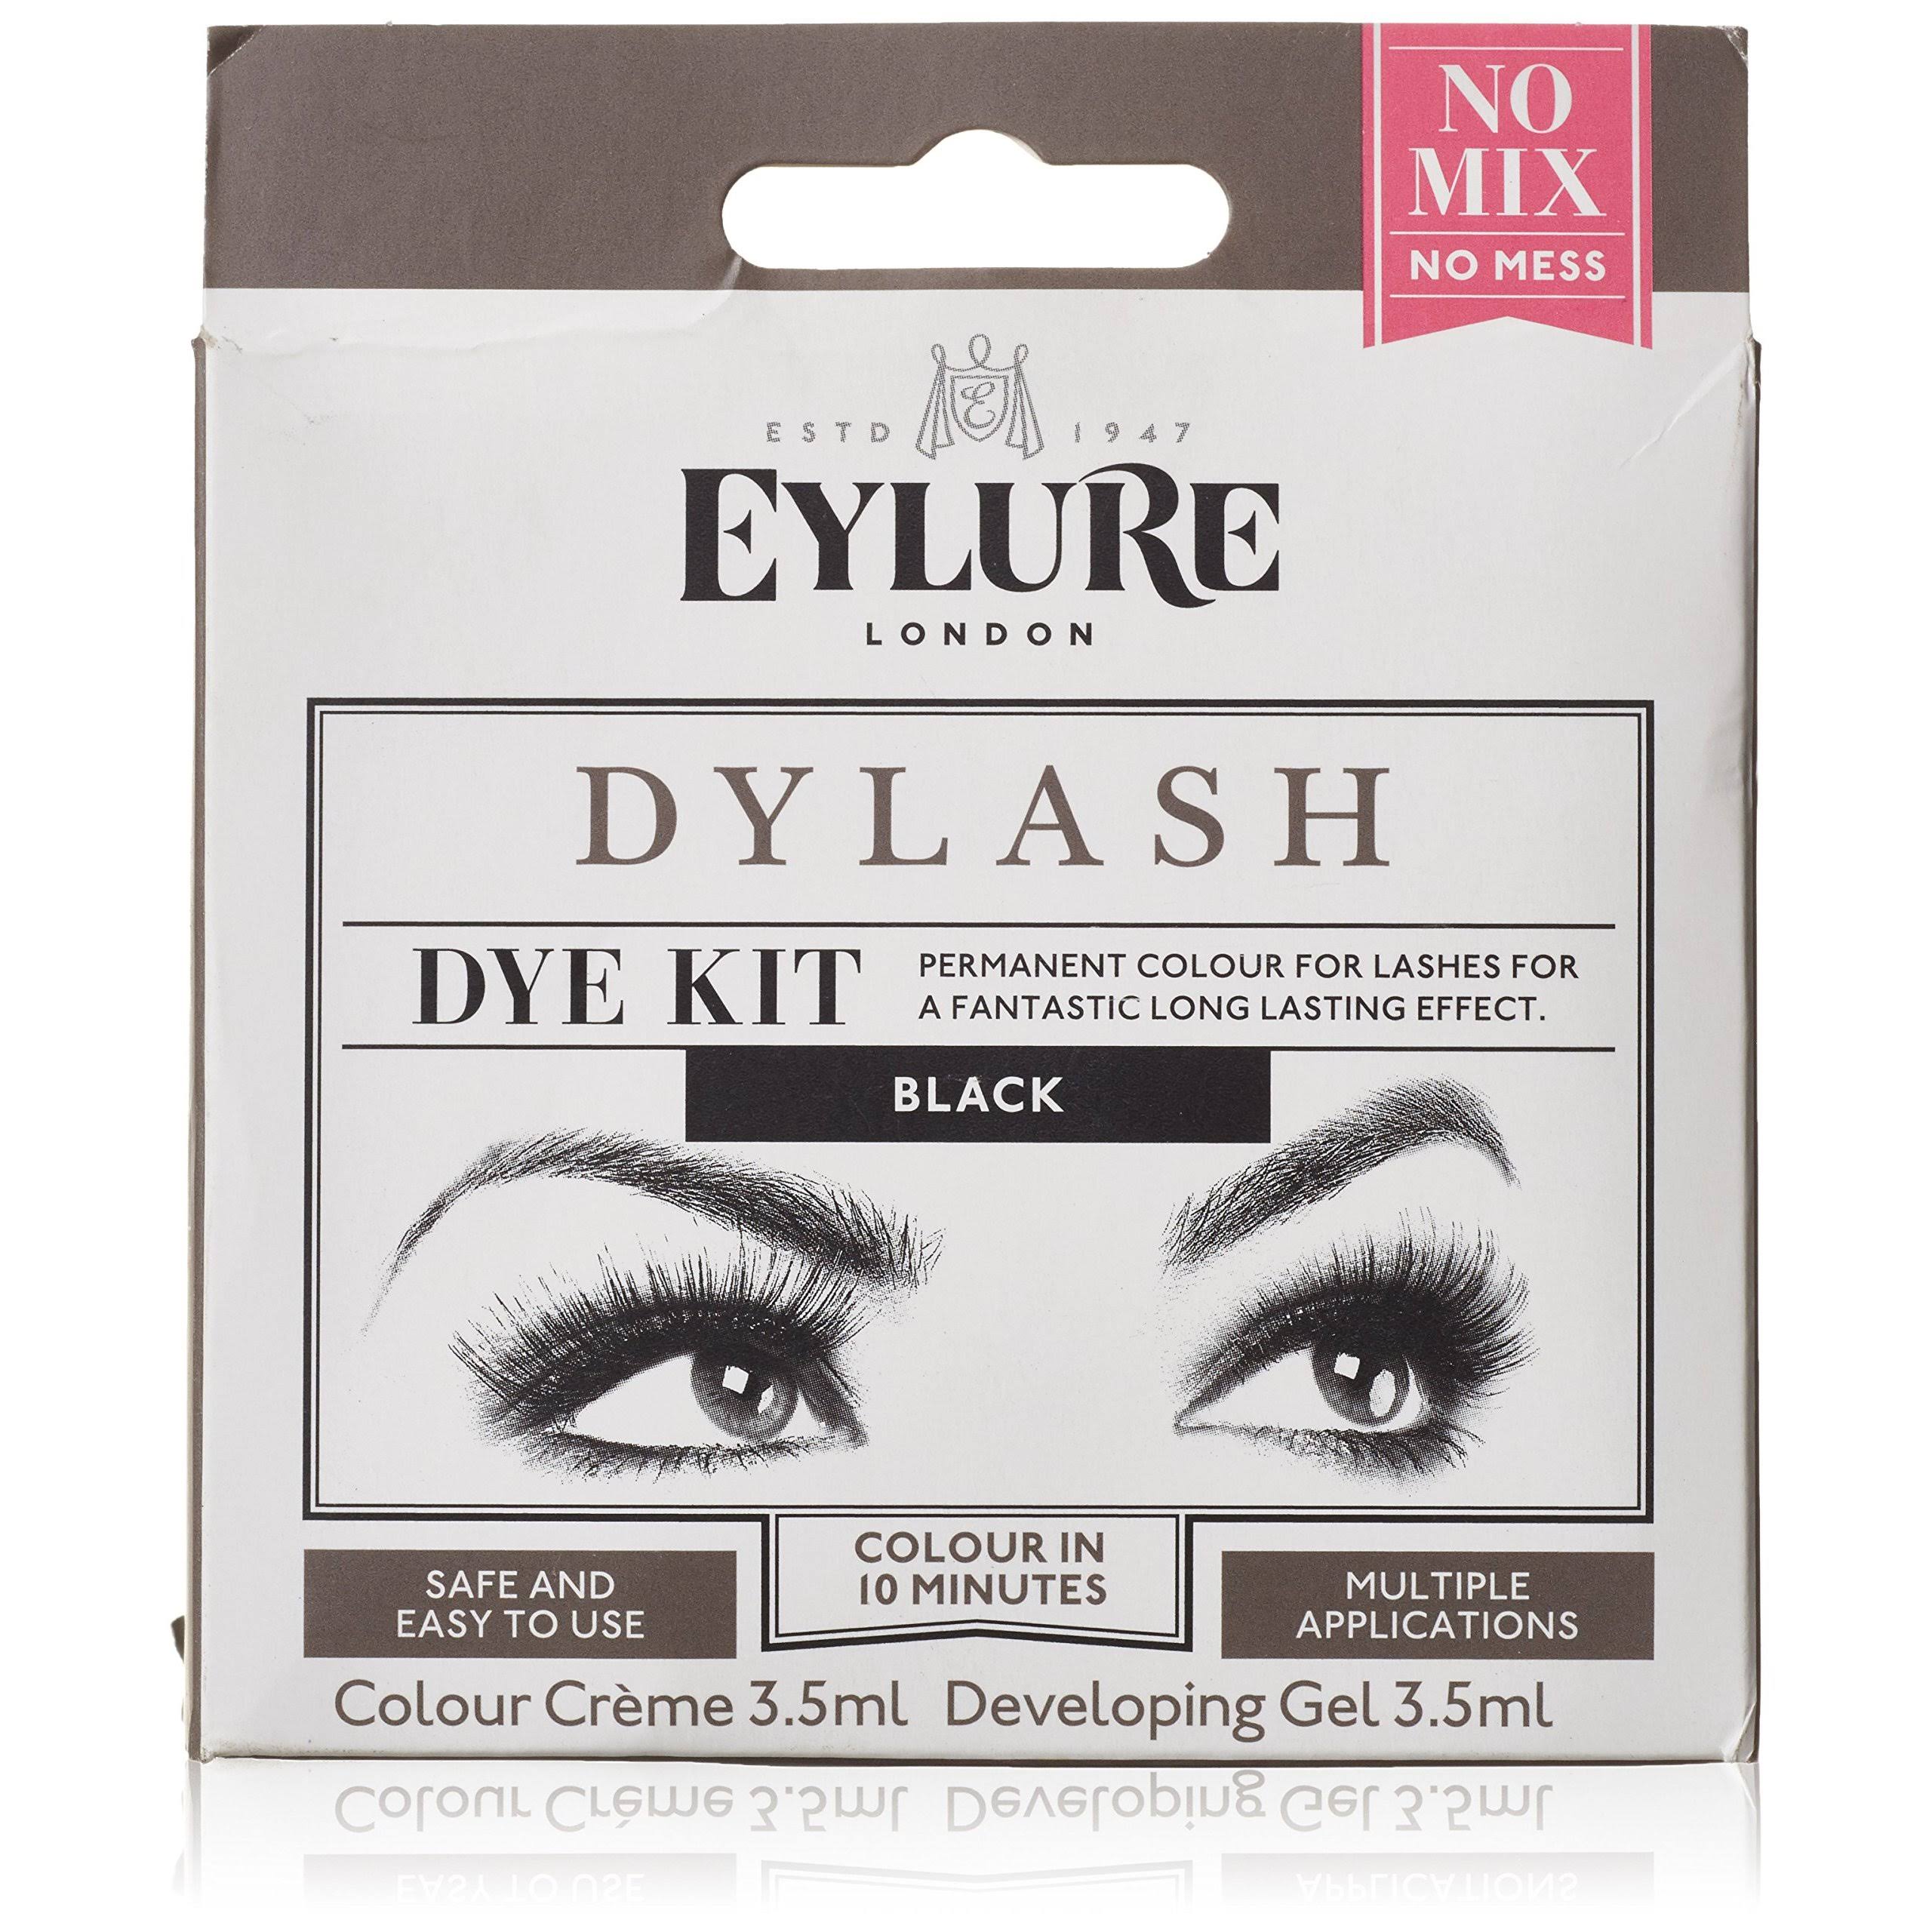 Eylure Dylash Dye Kit - Black, 3.5ml